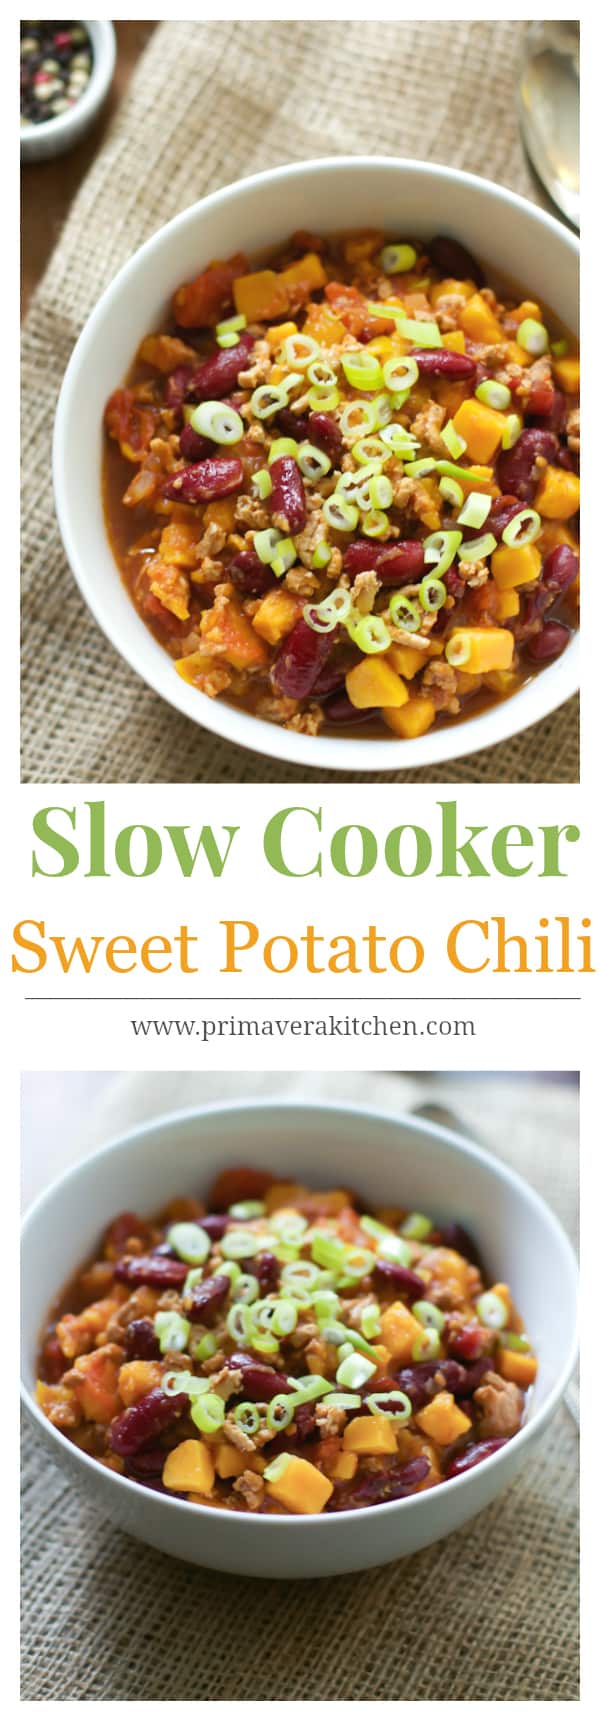 slow cooker sweet potato chili